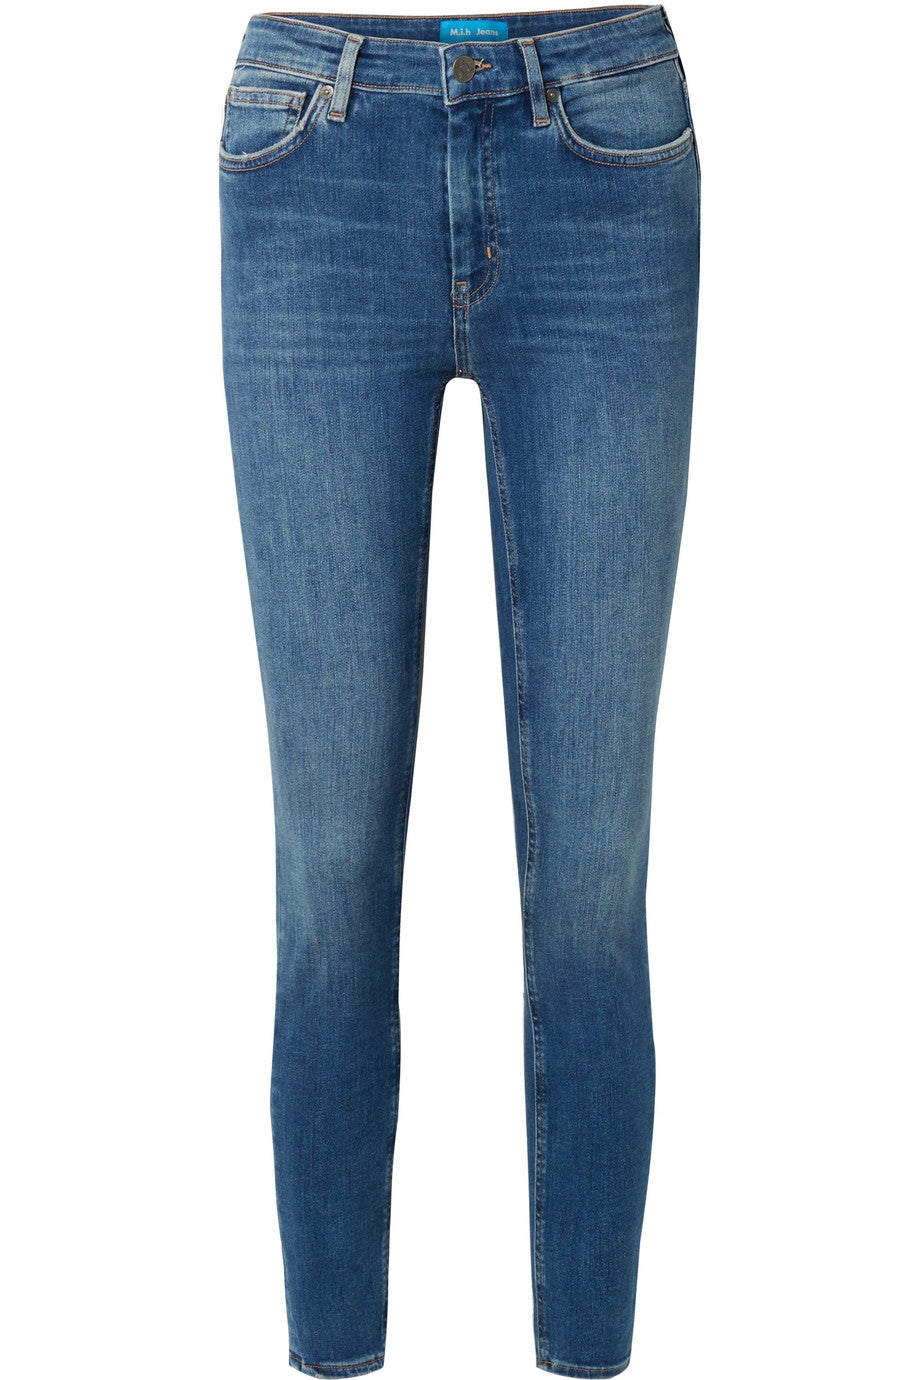 Mih Jeans - Blue denim 'Bridge' high-rise skinny jeans